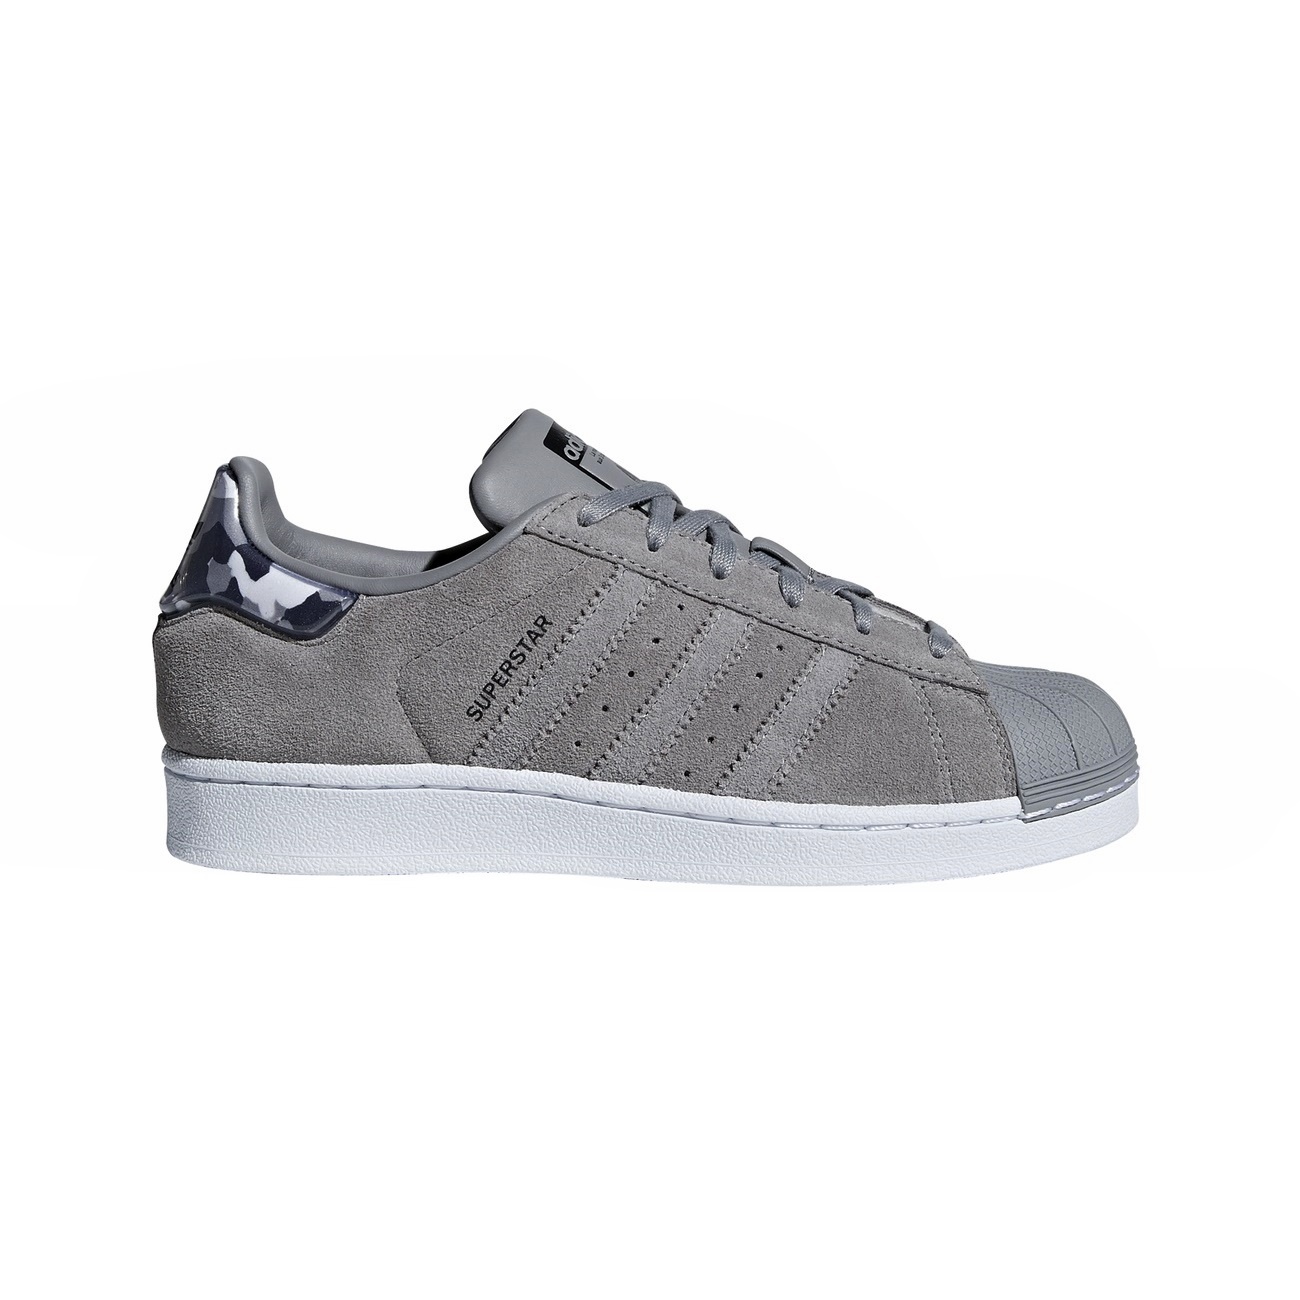 Adidas Originals Superstar Solid Grey"